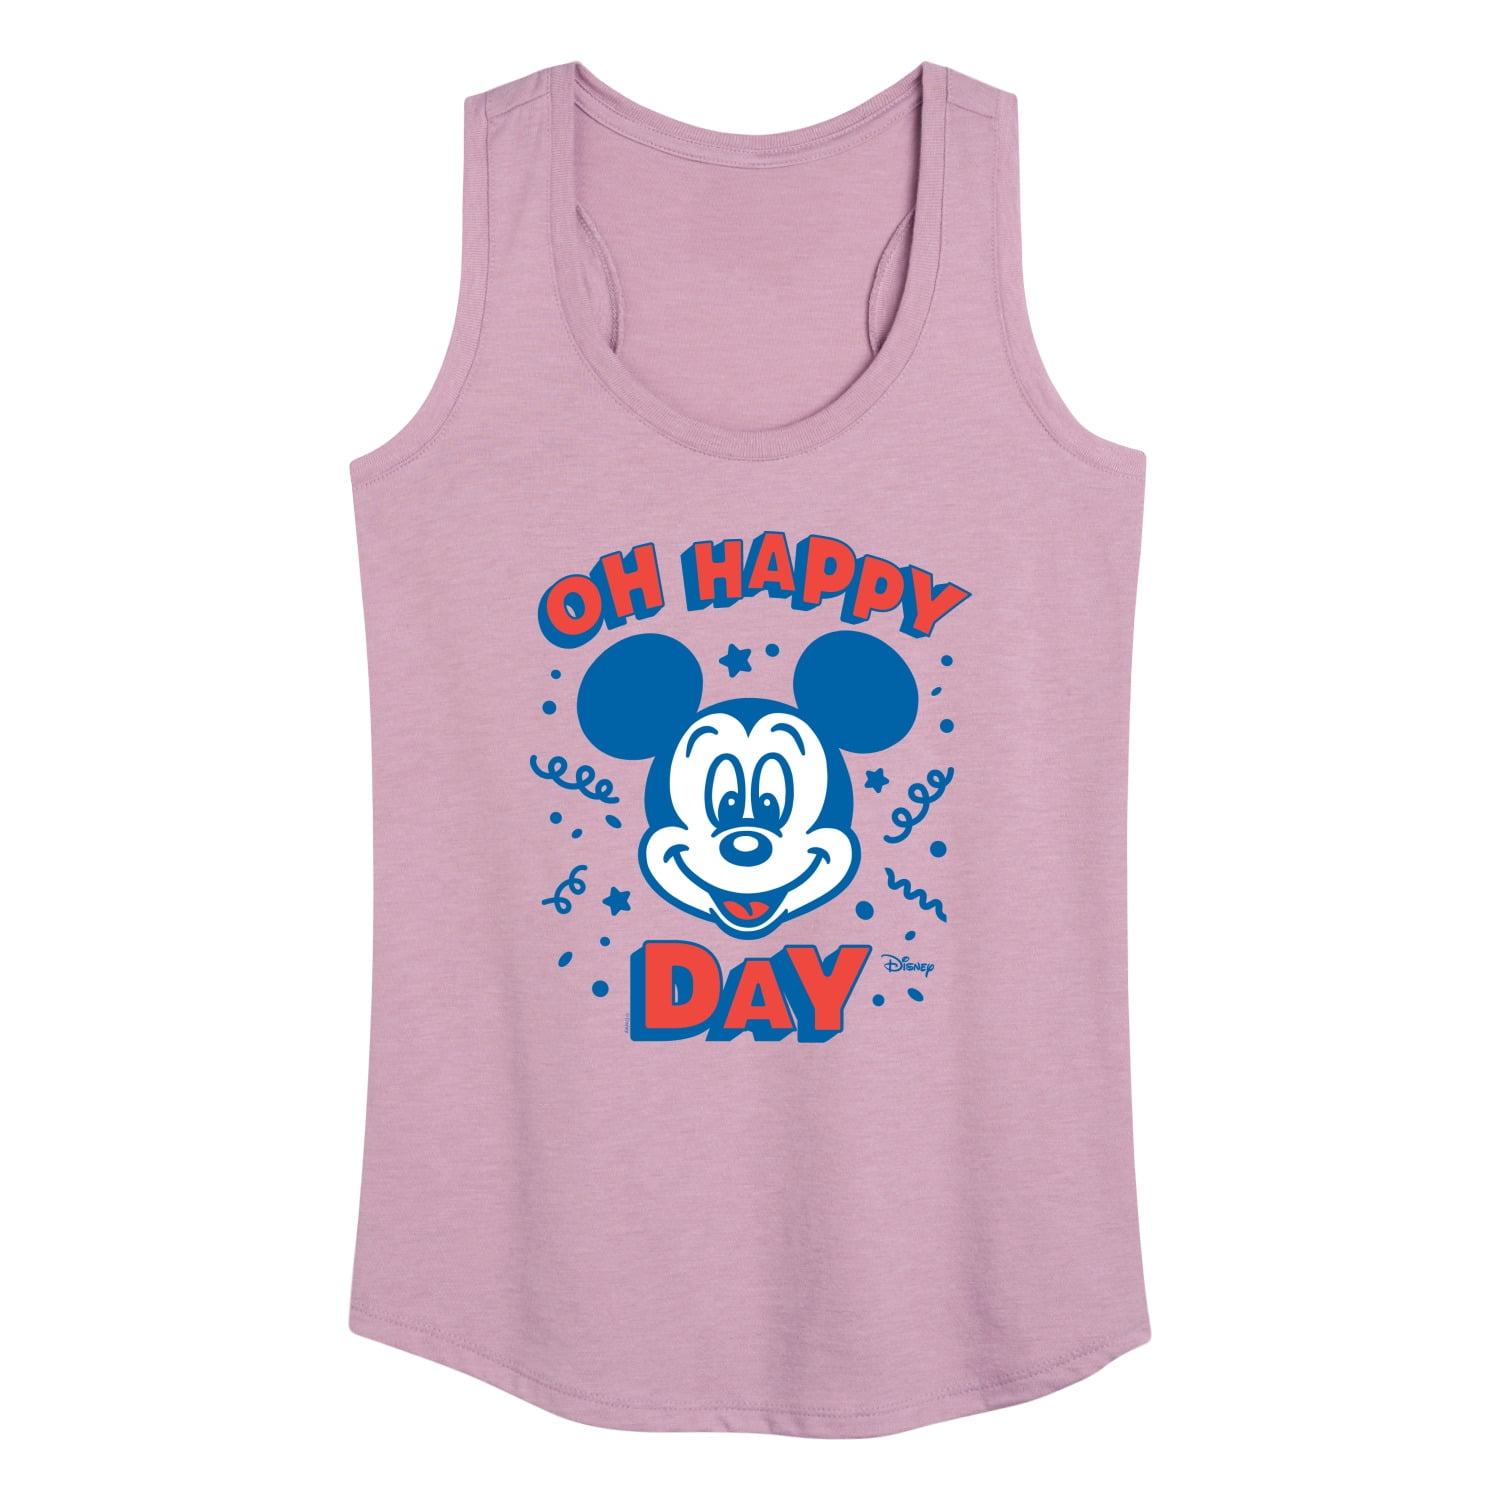 Disney Tank Top for Women - RunDisney - Mickey Mouse